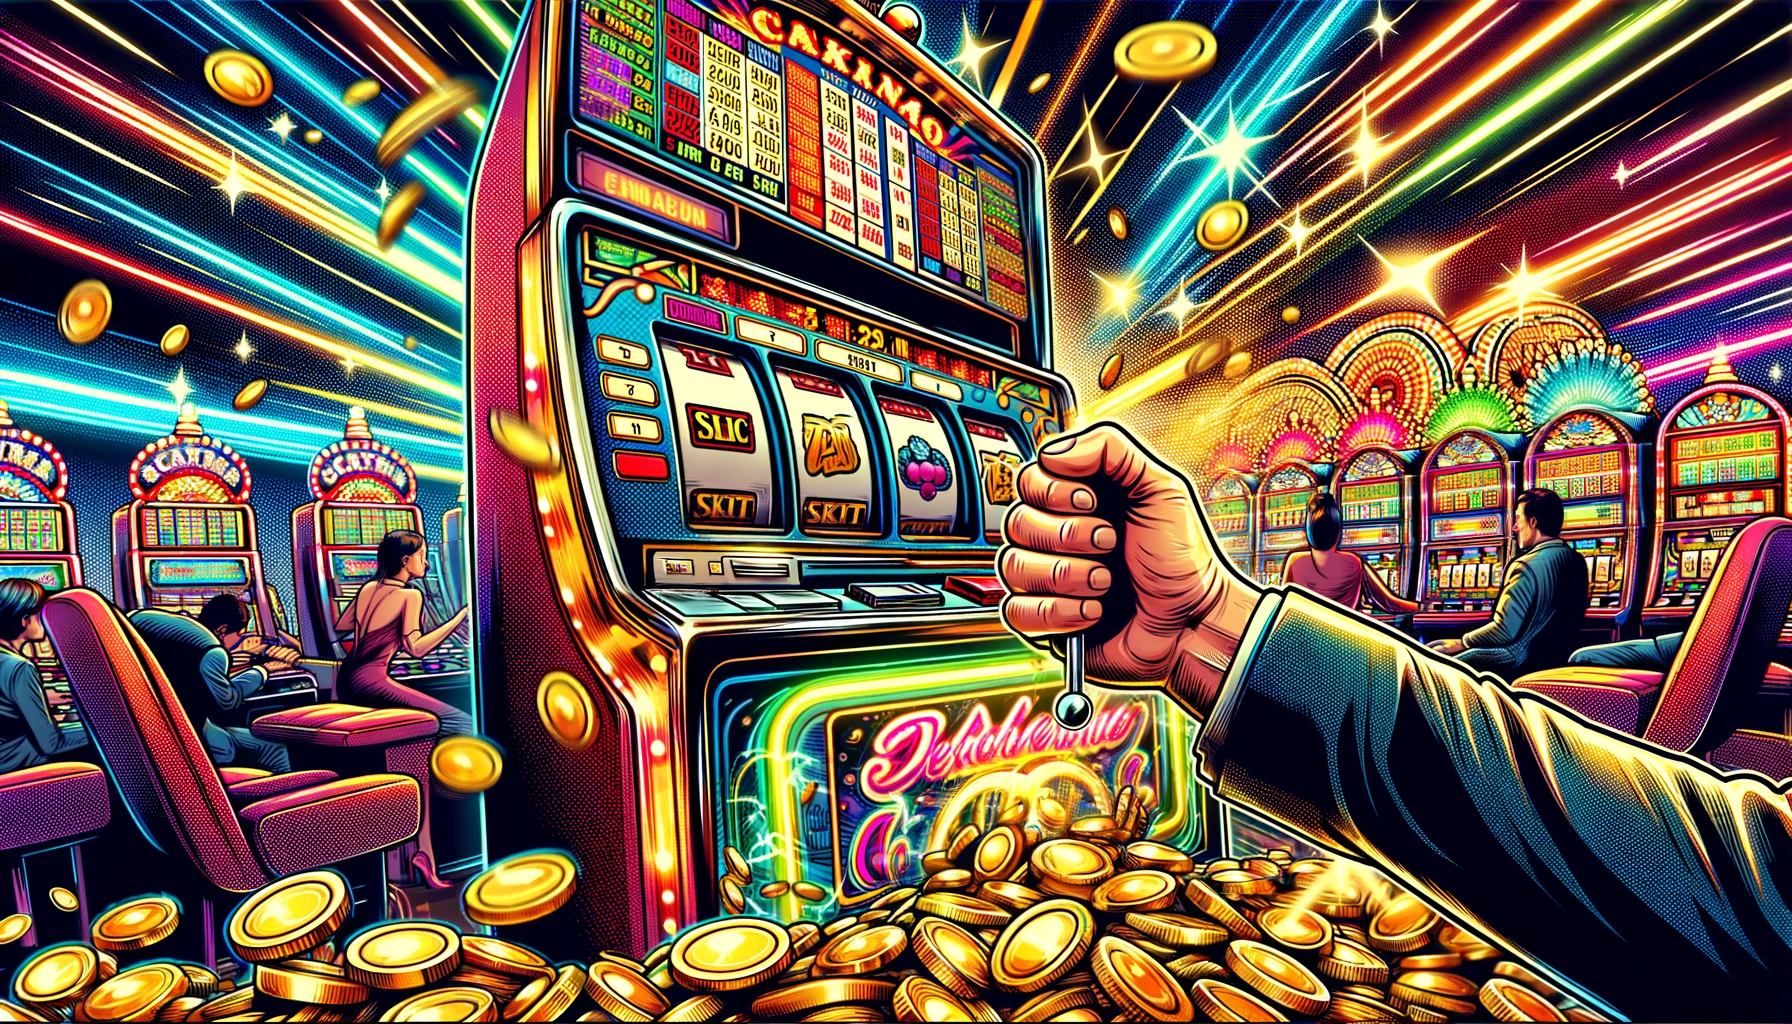 How to Win Money at the Casino Slot Machines